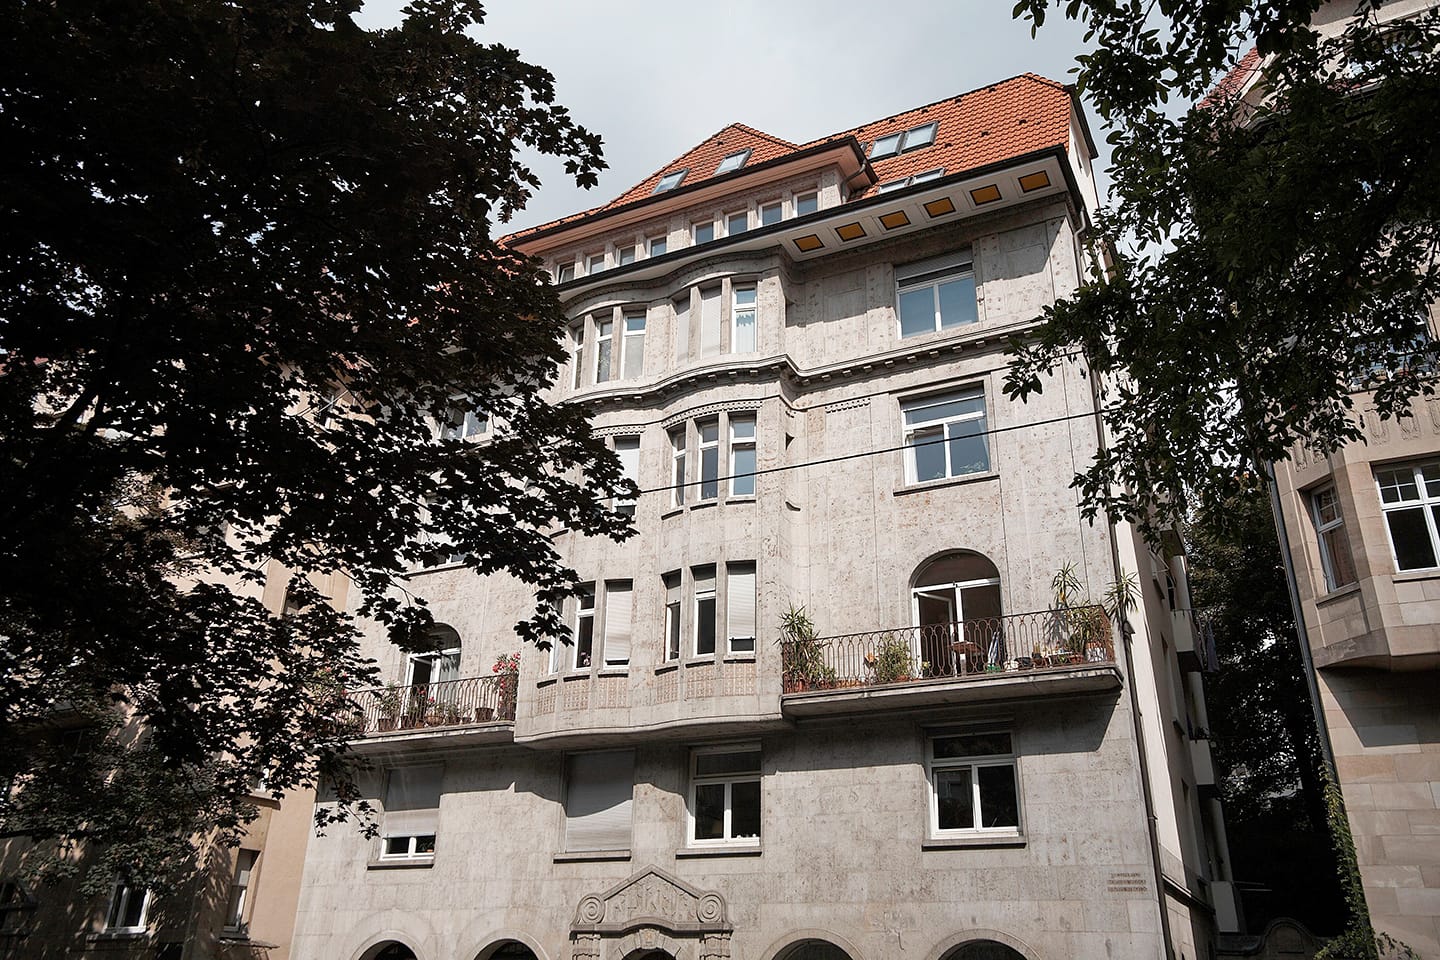 Mehrfamilienhaus Bismarckstraße: Fassade